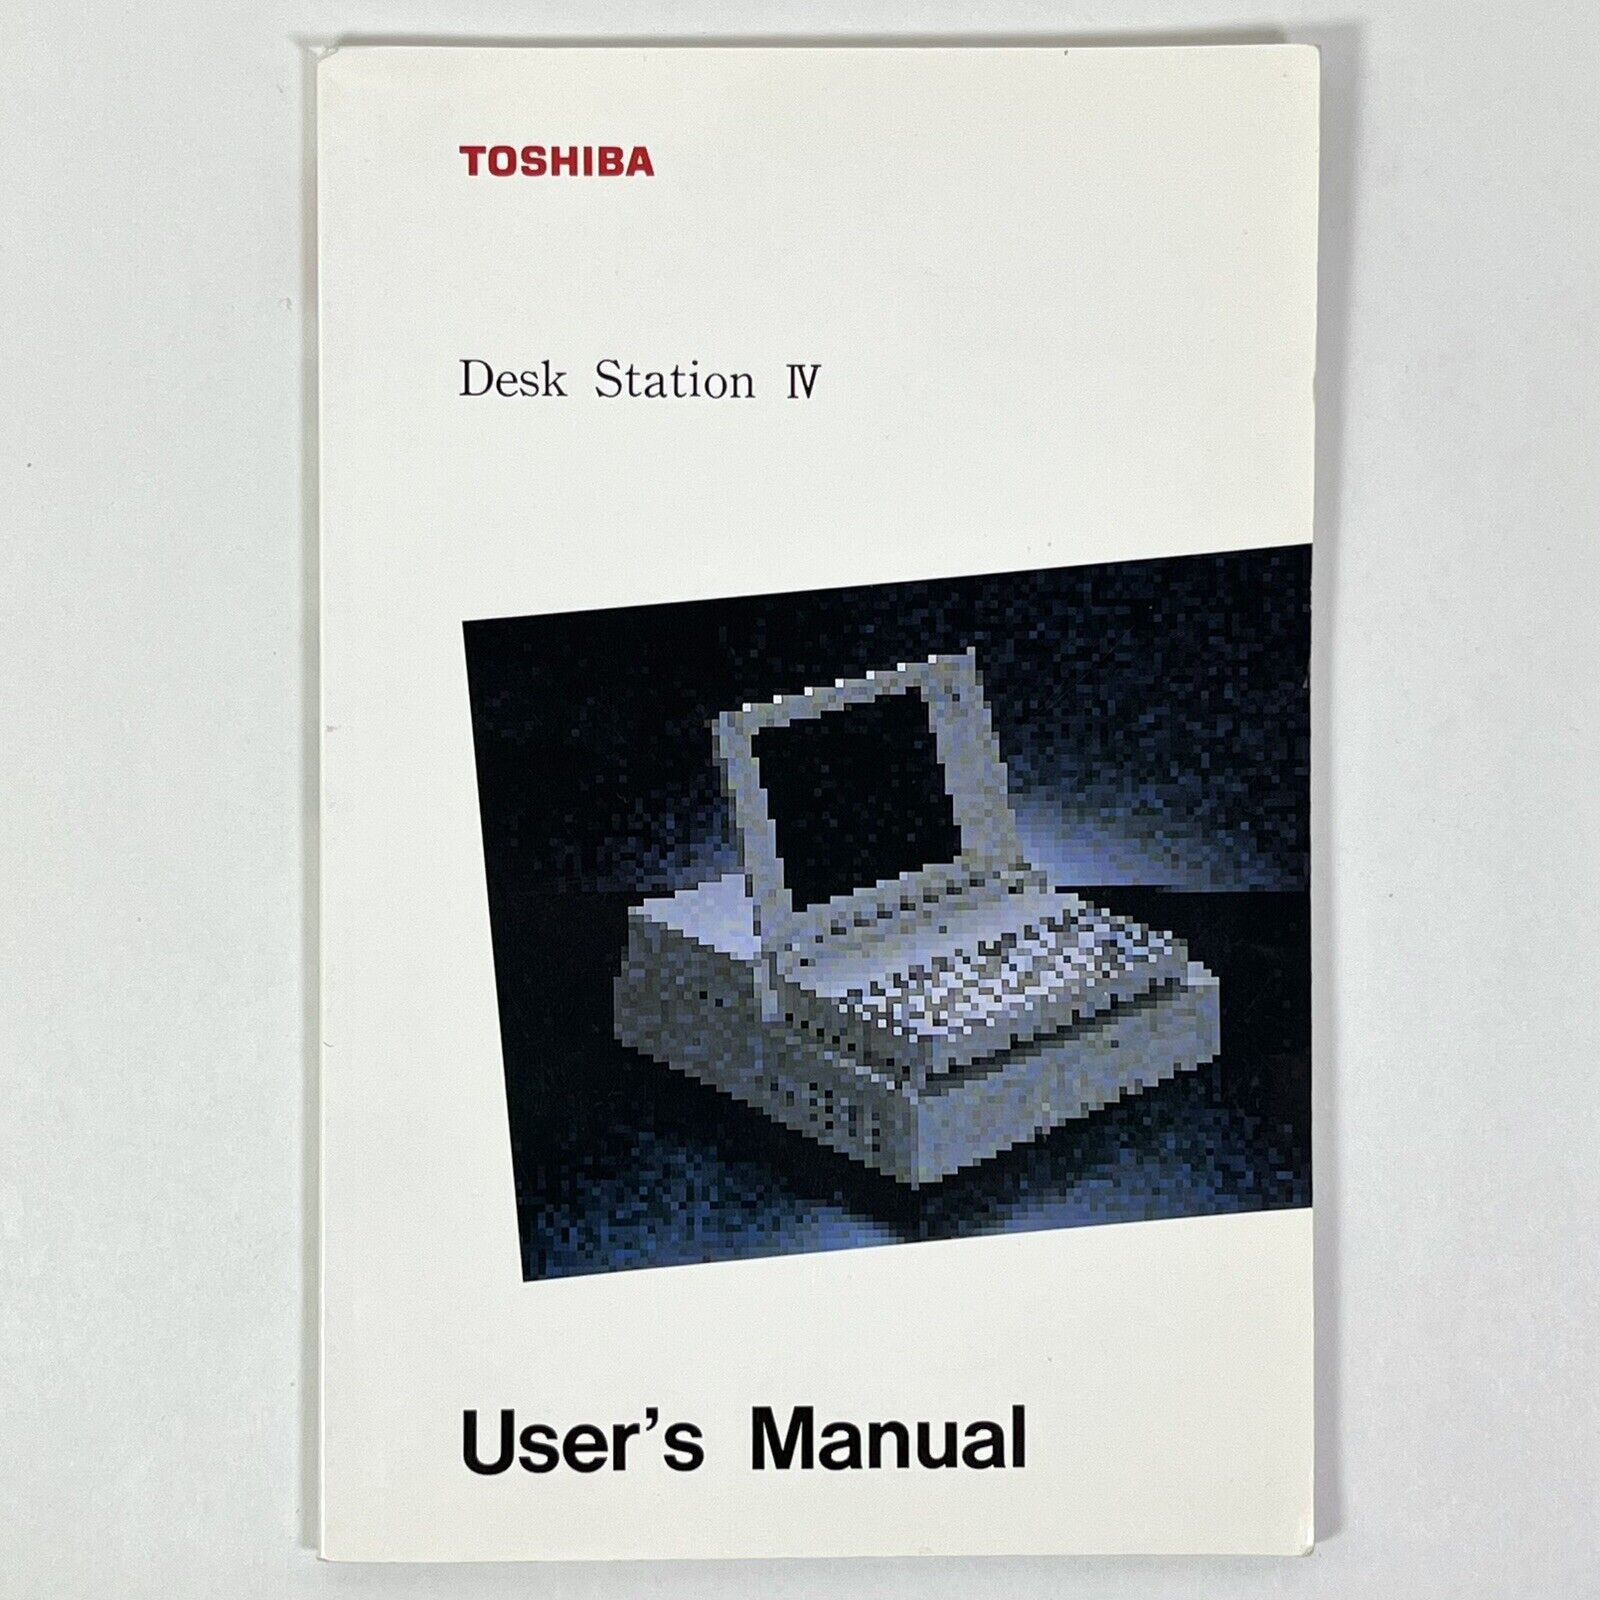 Vintage Toshiba Desk Station IV computer USER'S MANUAL instructions guide 1991